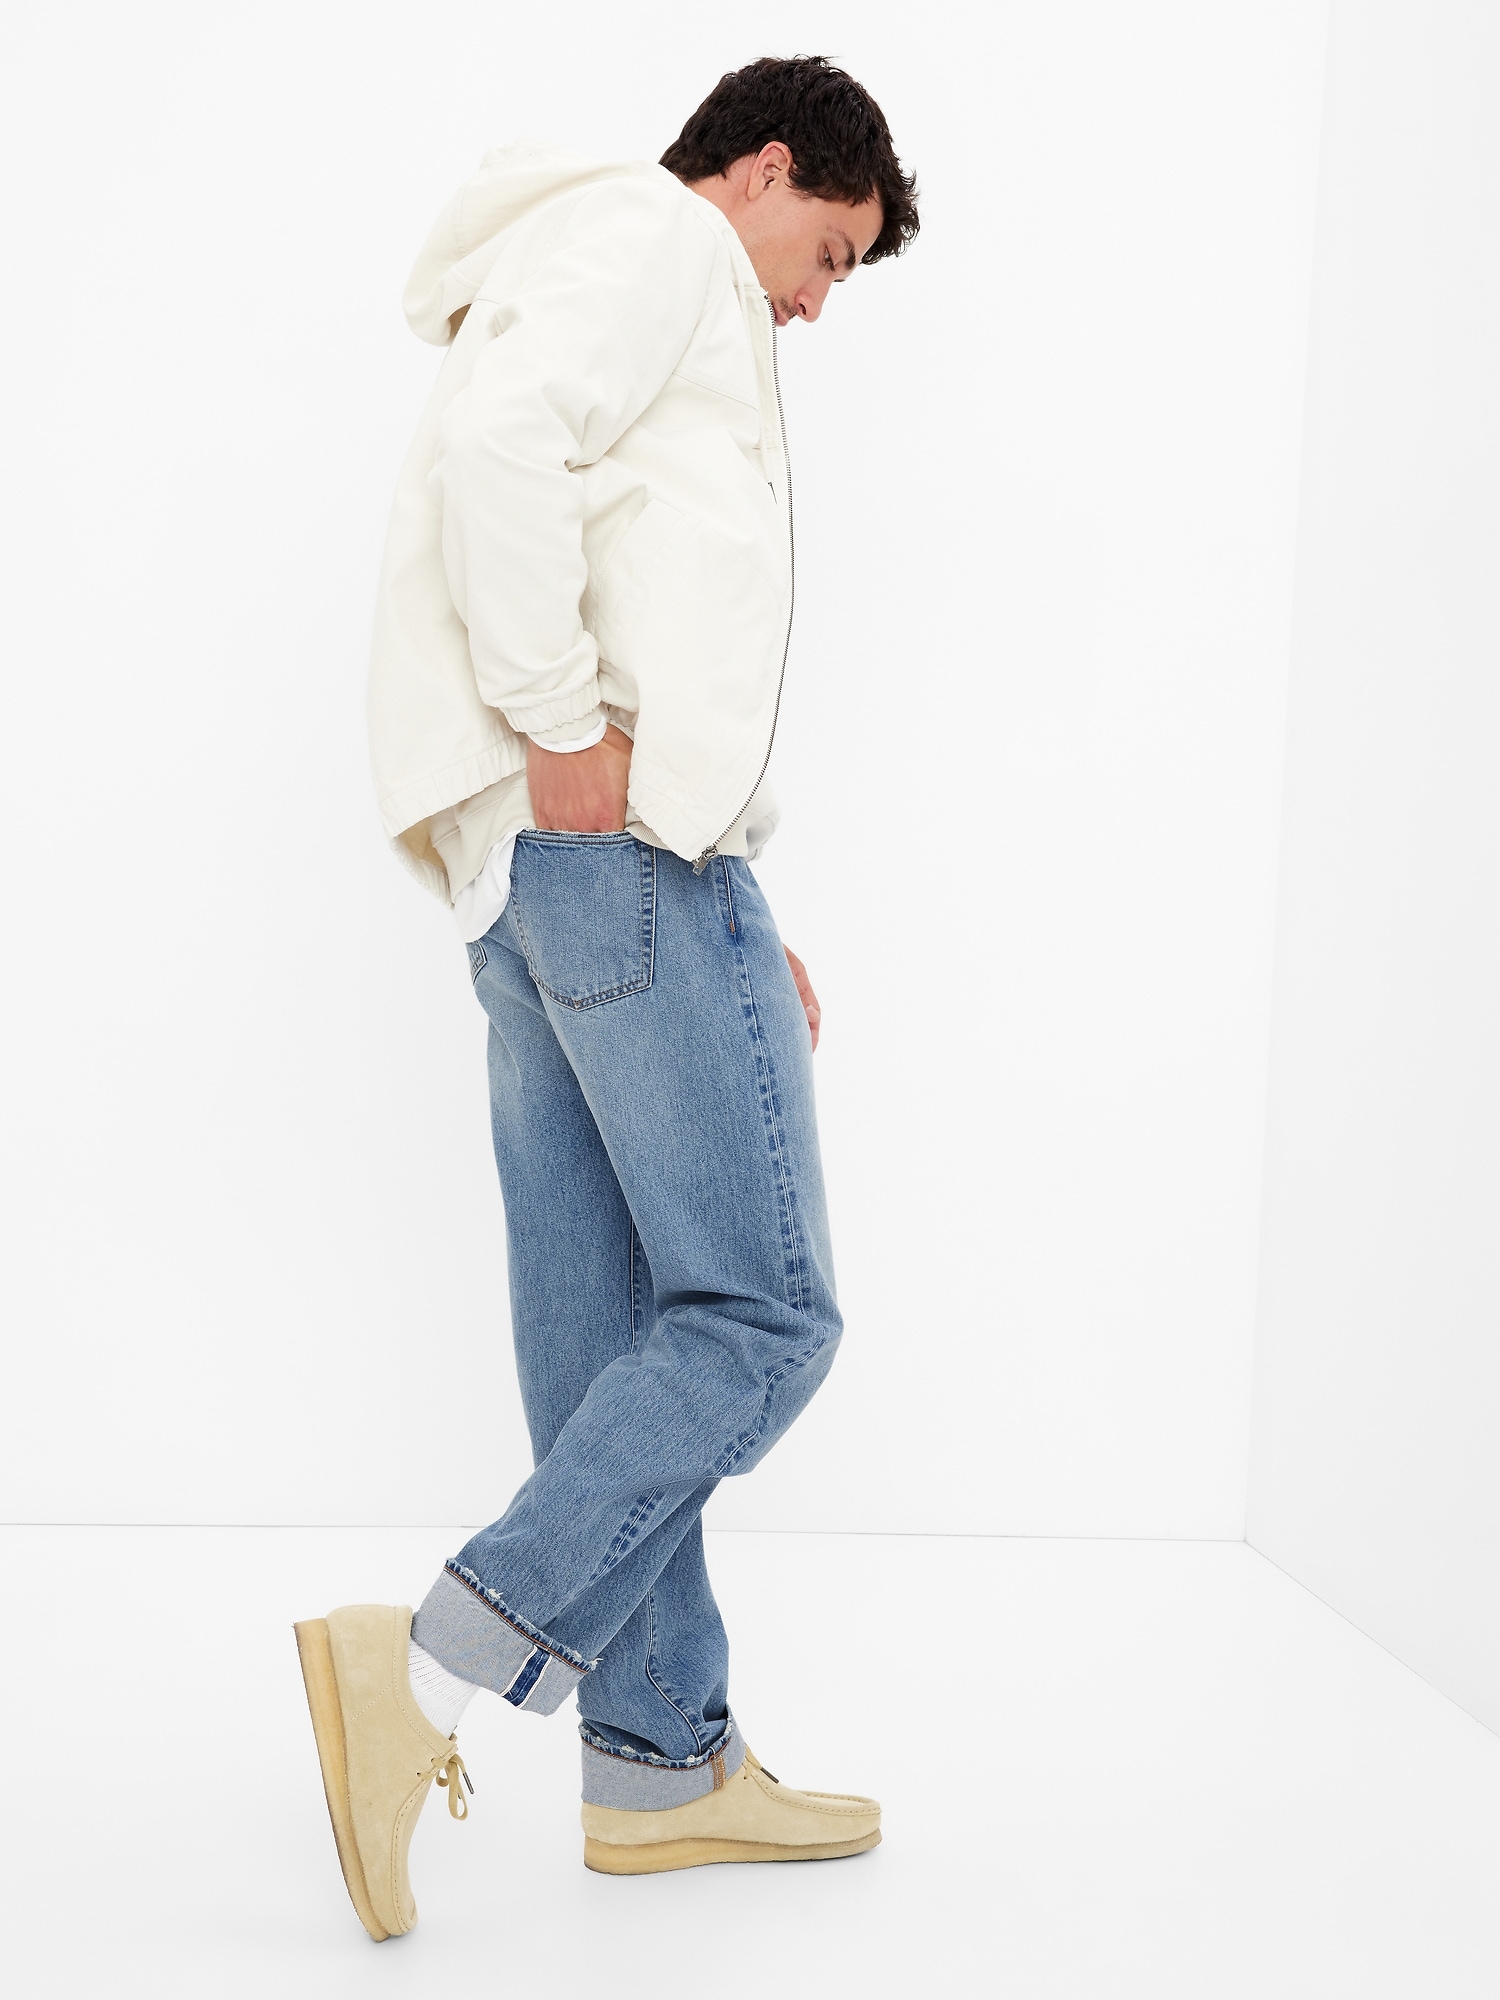 90s Original Straight Fit Selvedge Jeans | Gap